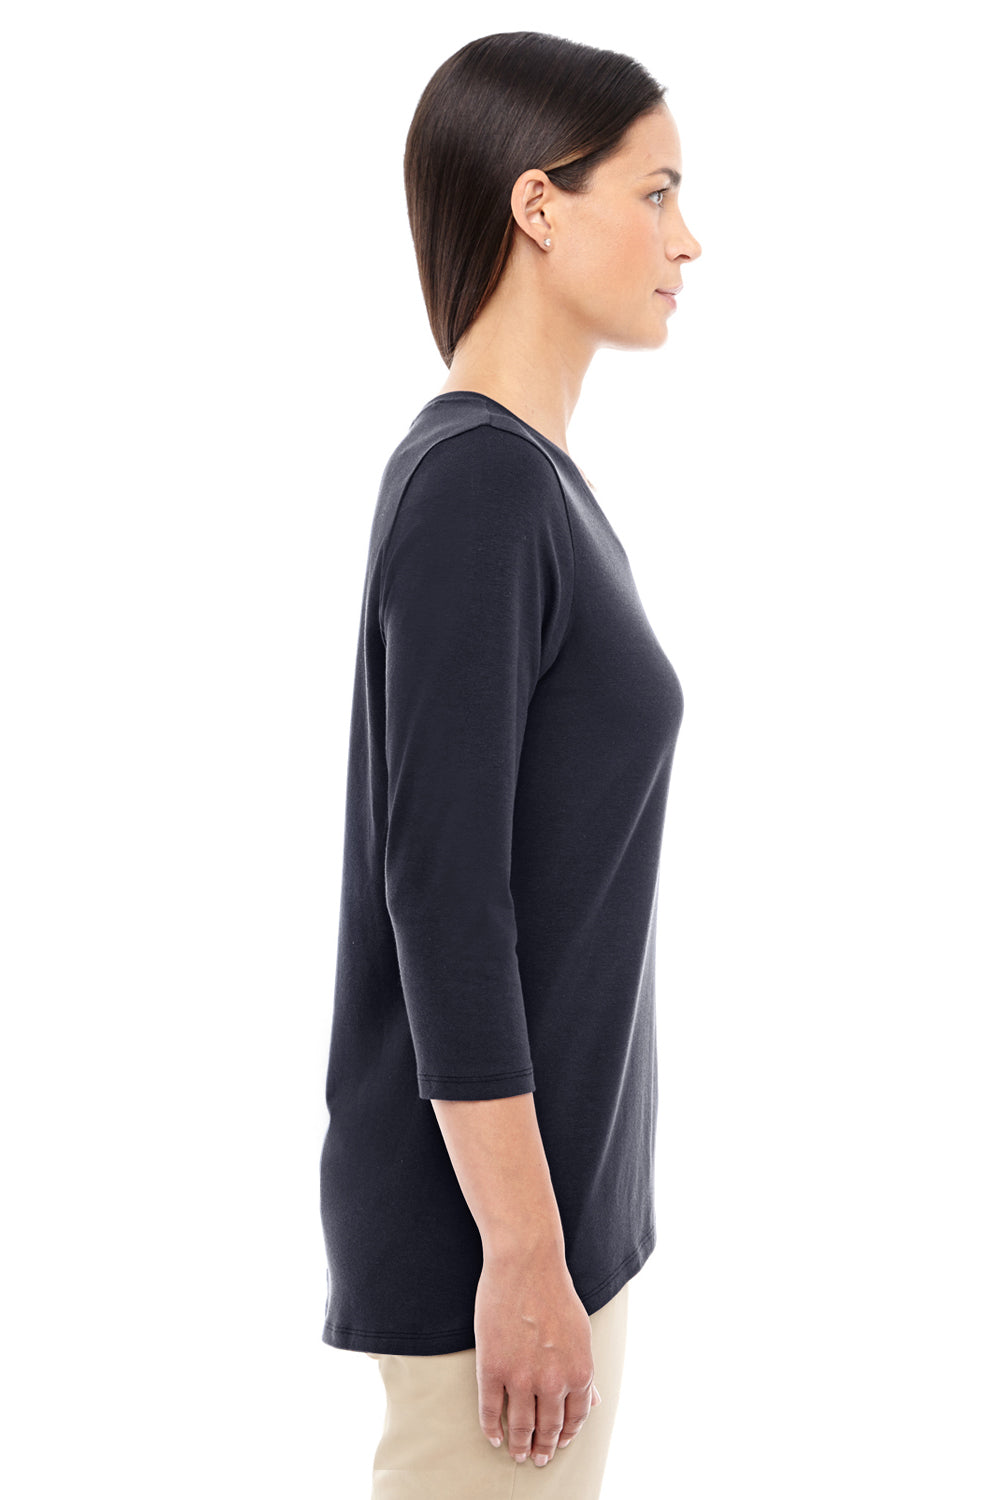 Devon & Jones DP184W Womens Perfect Fit 3/4 Sleeve V-Neck T-Shirt Black Side